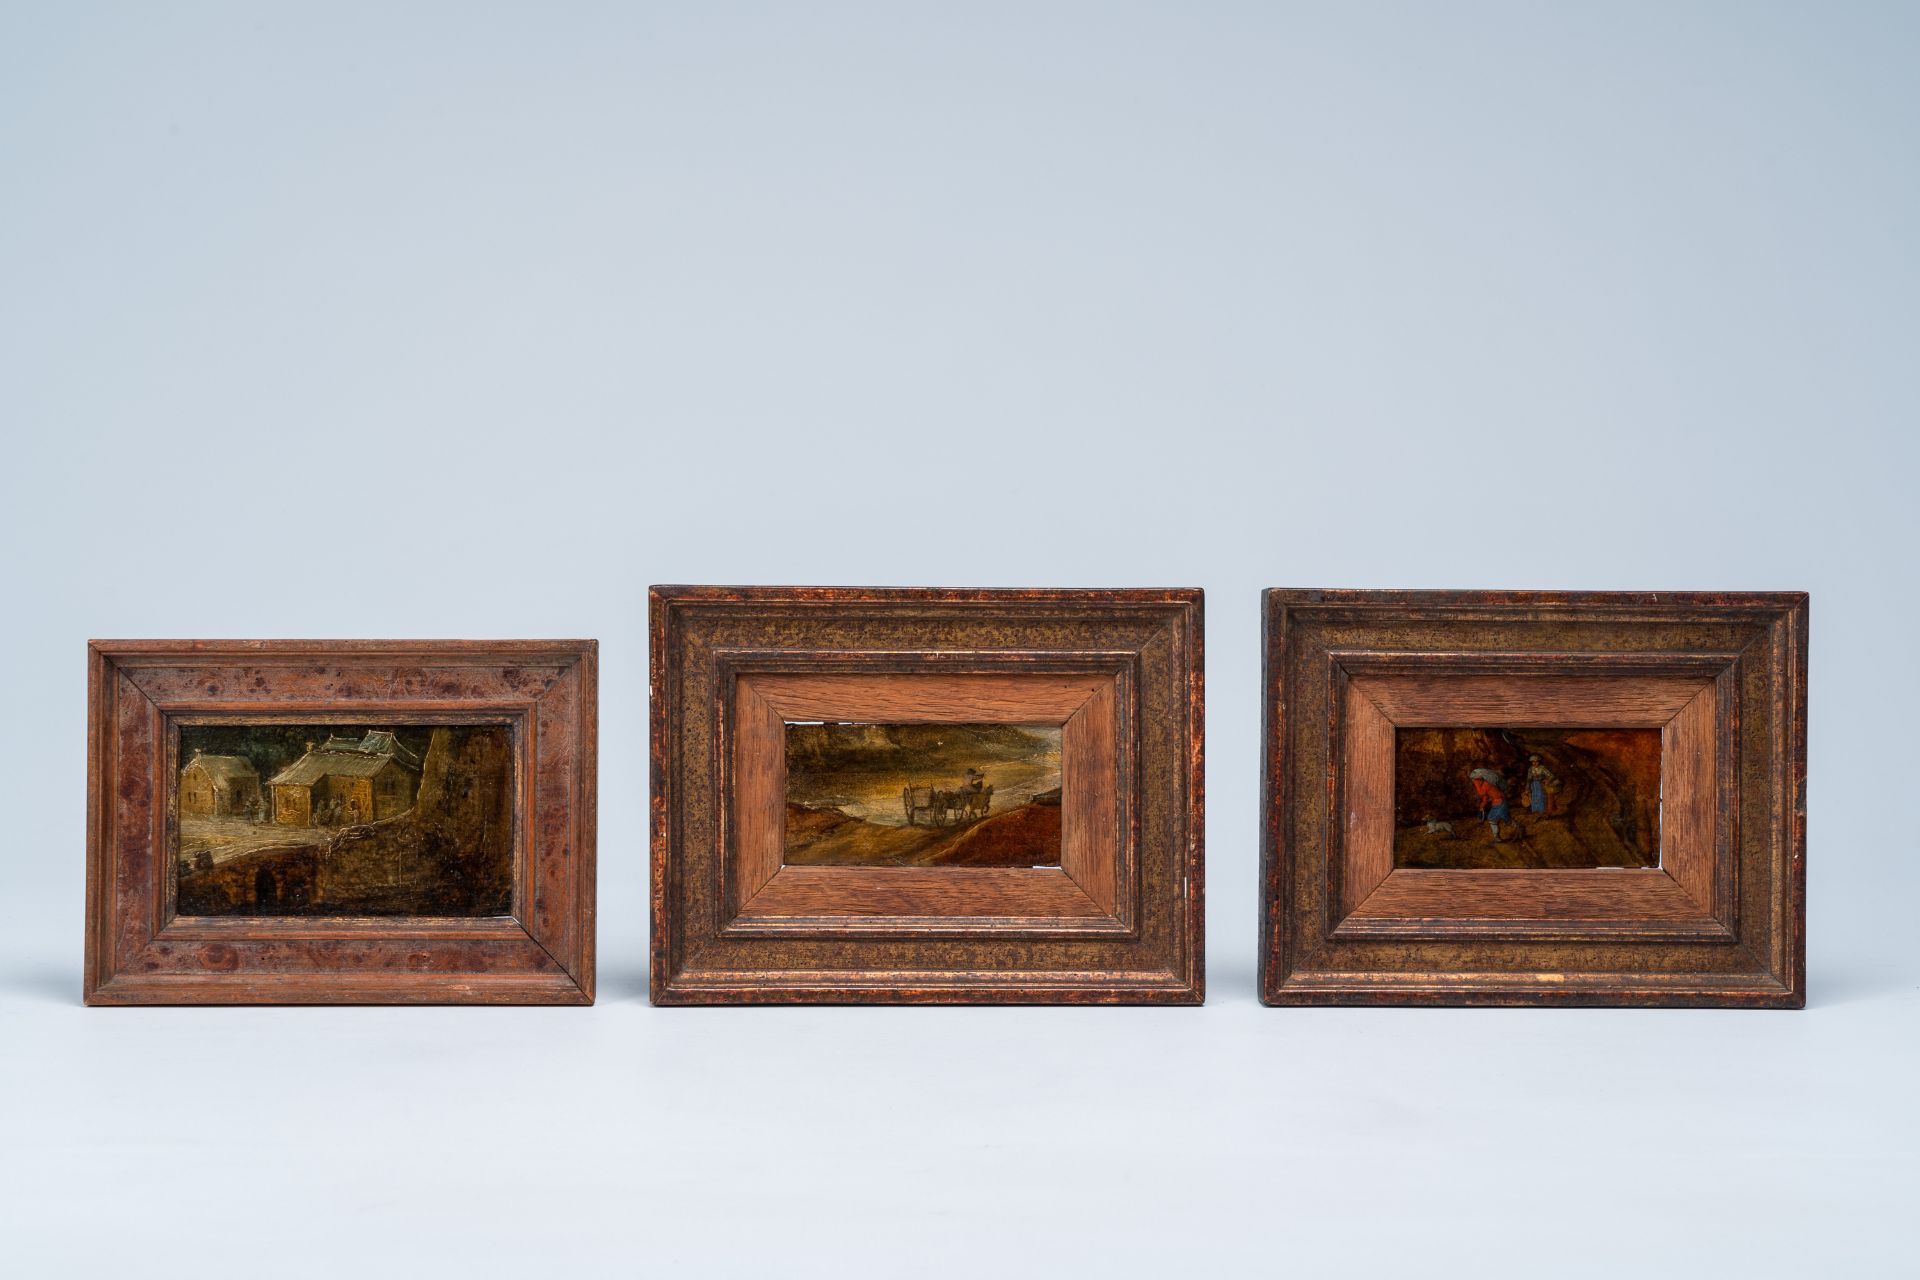 Flemish school, in the manner of Joos de Momper and Jan II Brueghel: Three scenes from everyday life